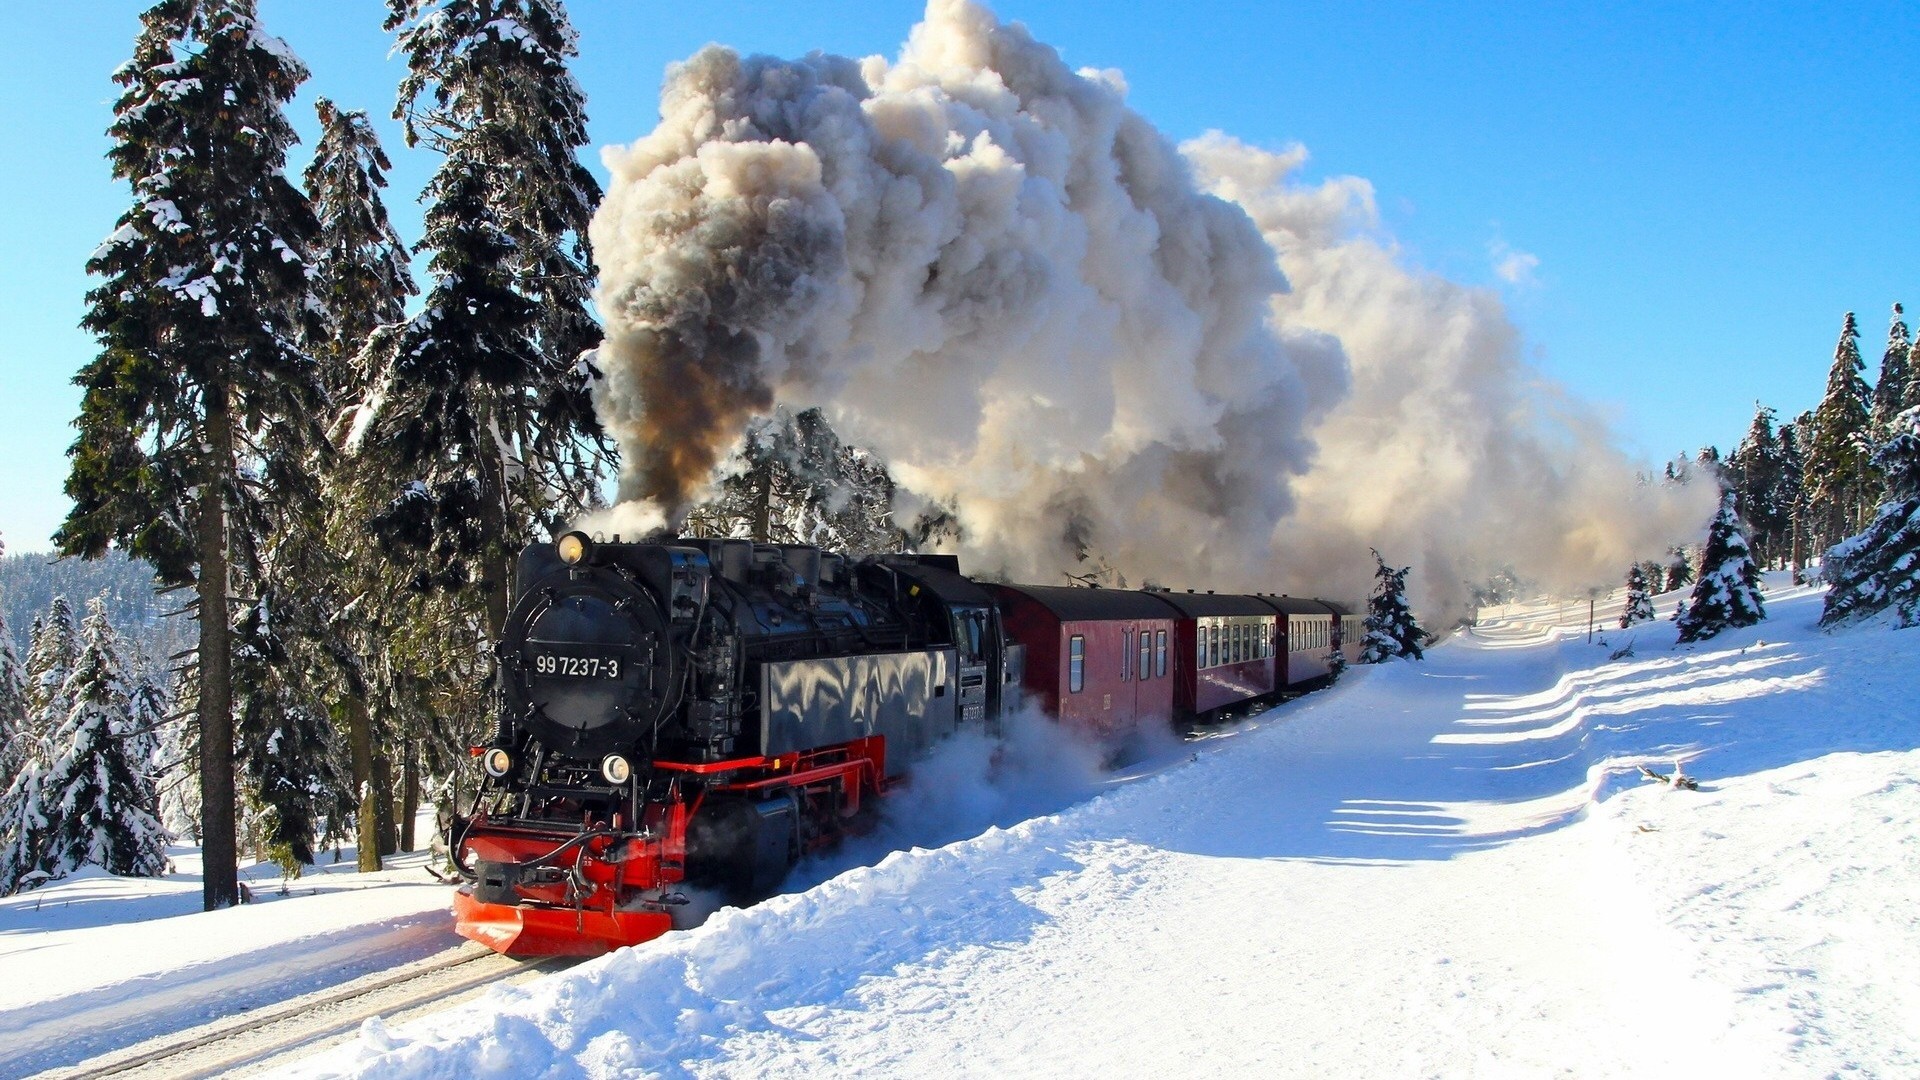 General 1920x1080 train snow vehicle winter smoke railway Steam Train steam locomotive ice locomotive